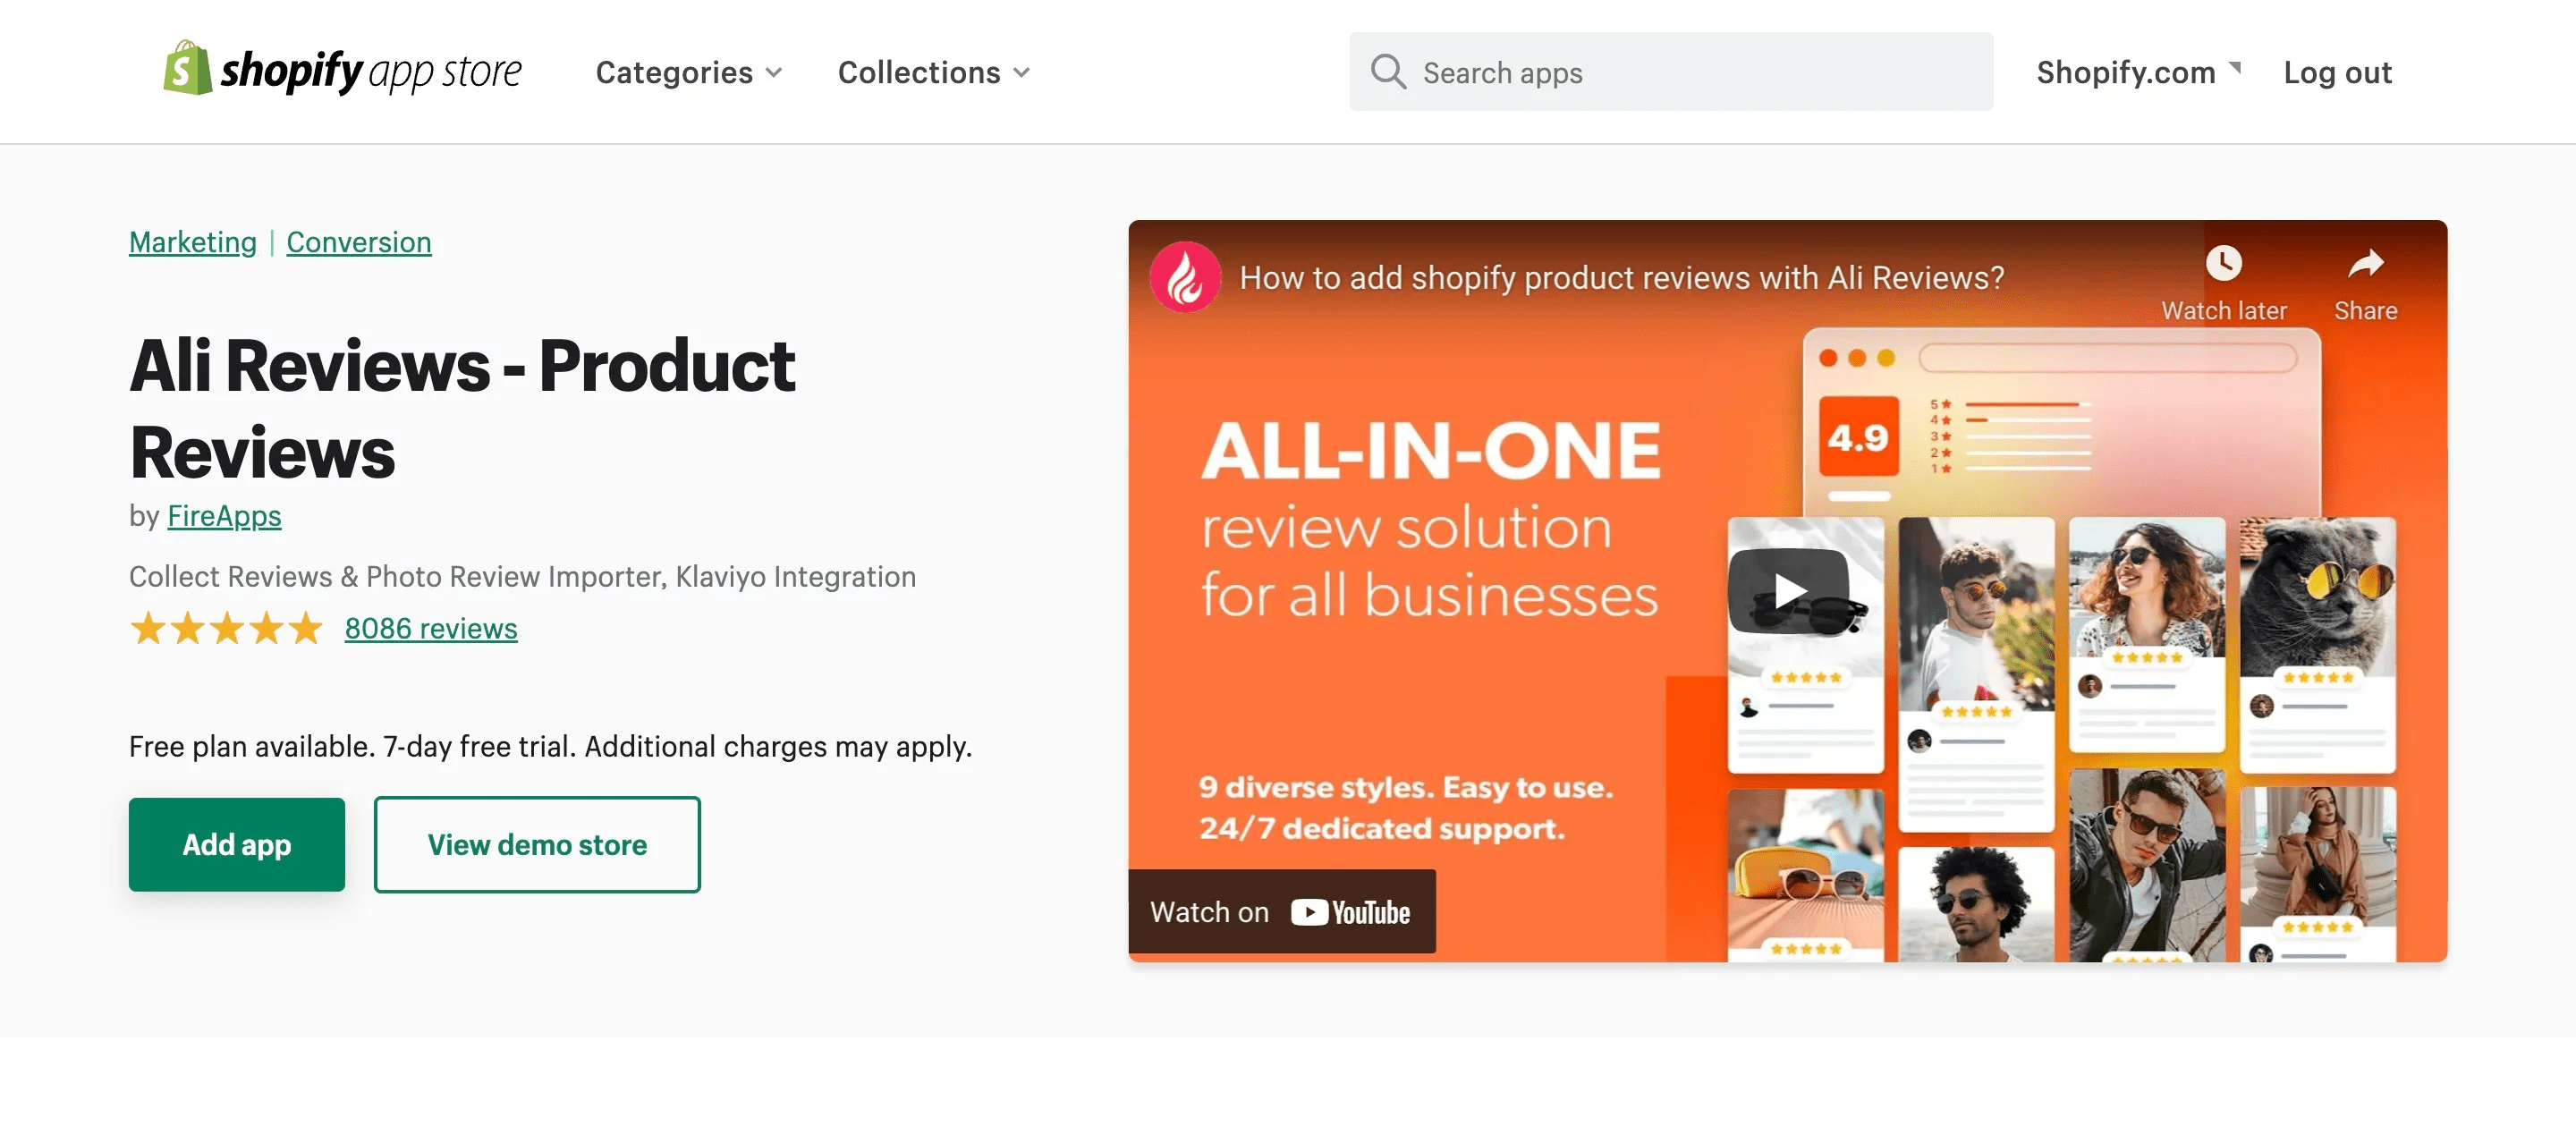 Ali Reviews ‑ Product Reviews